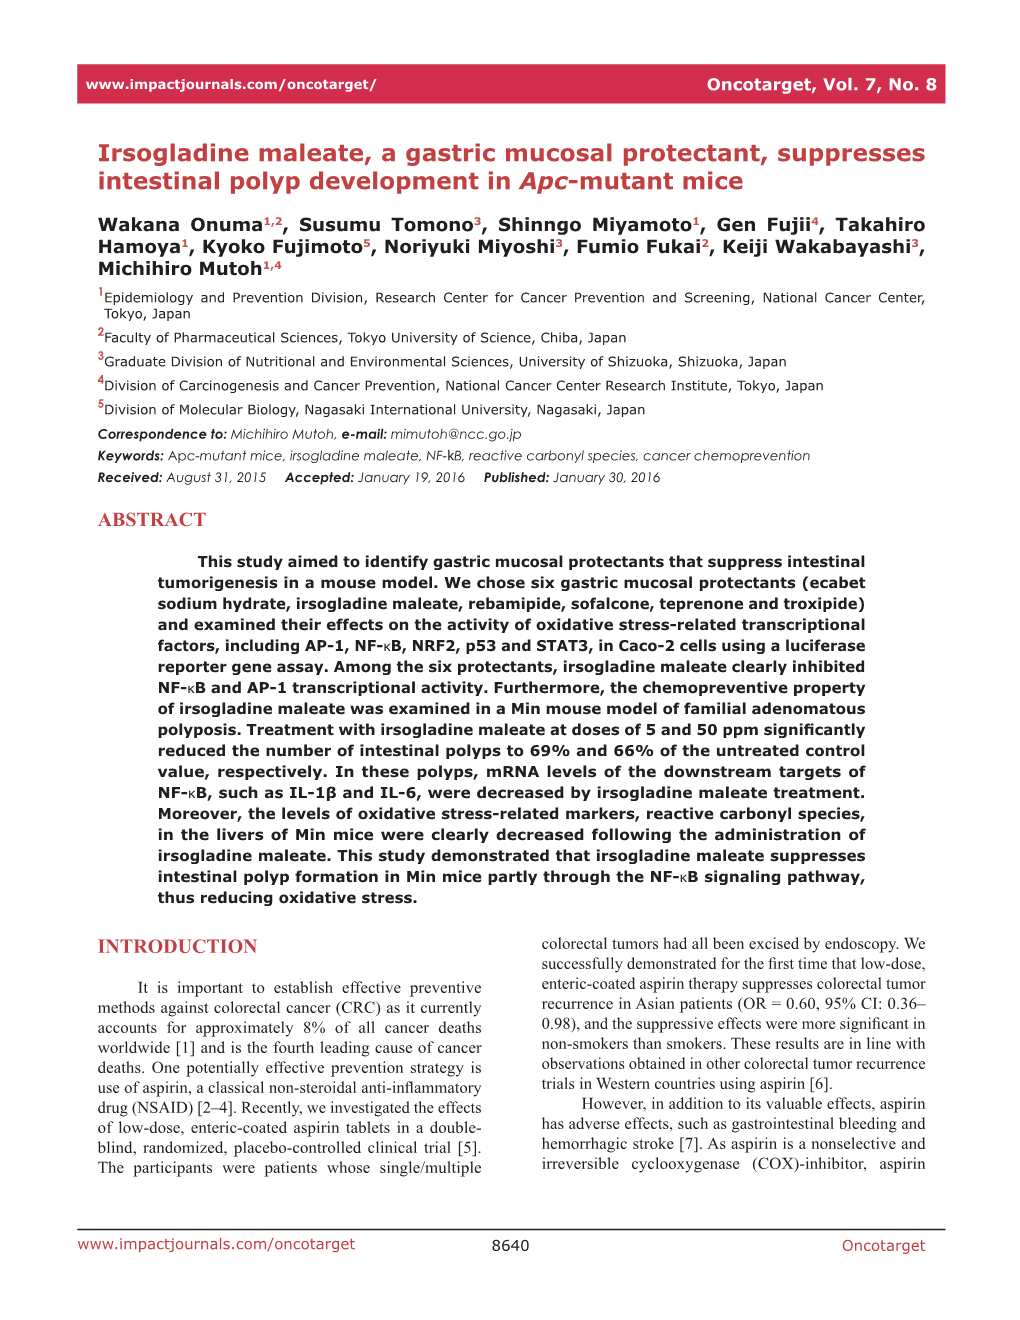 Irsogladine Maleate, a Gastric Mucosal Protectant, Suppresses Intestinal Polyp Development in Apc-Mutant Mice